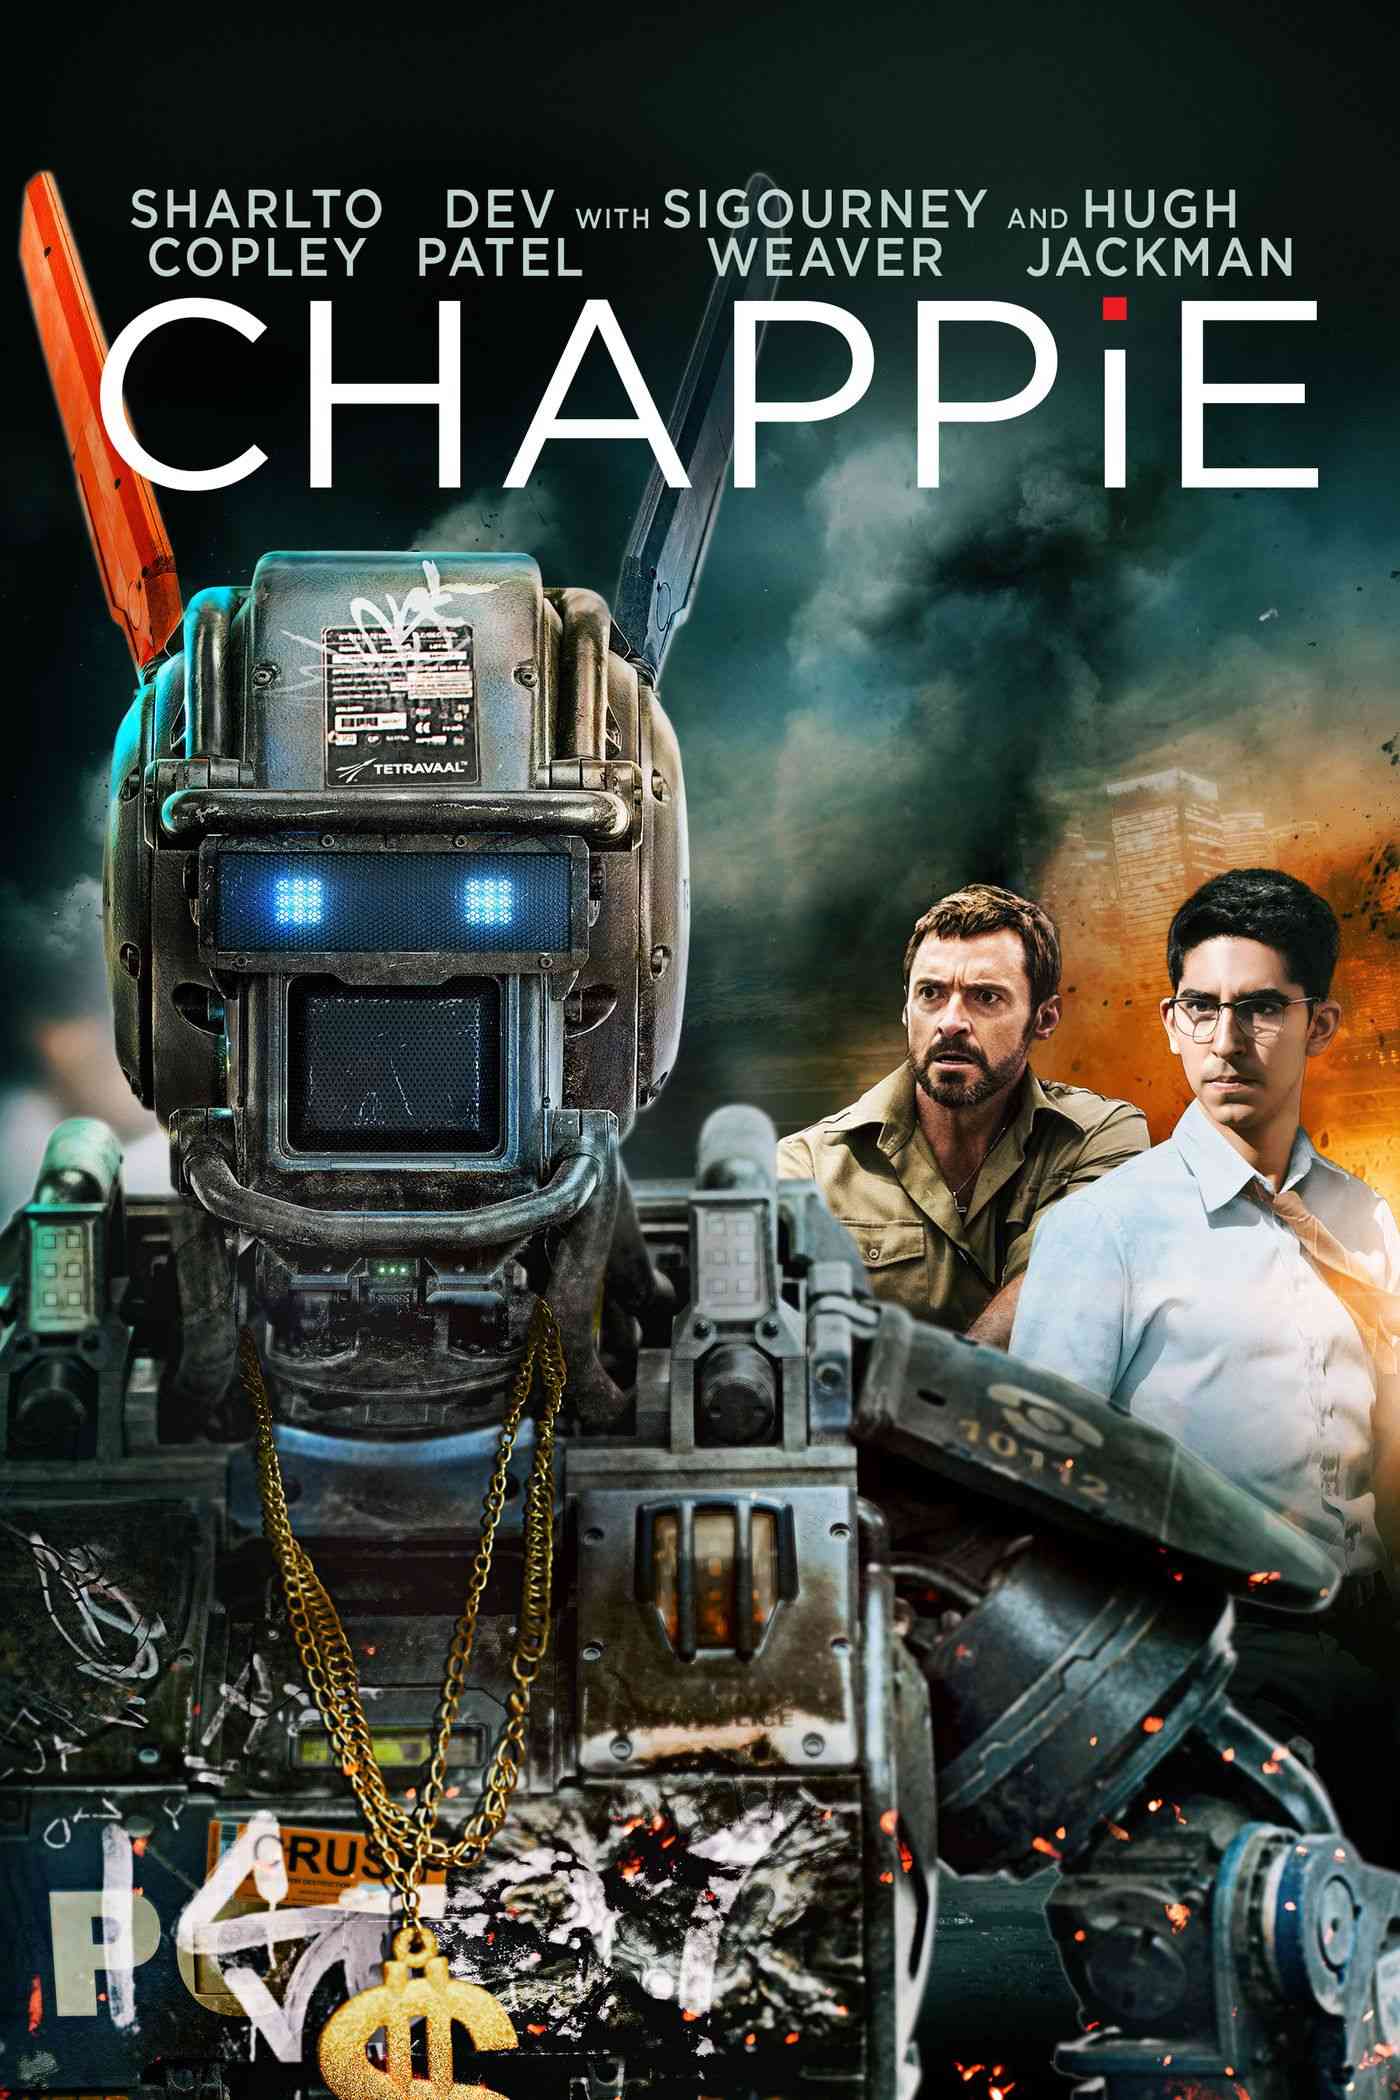 FULL MOVIE: Chappie (2015)